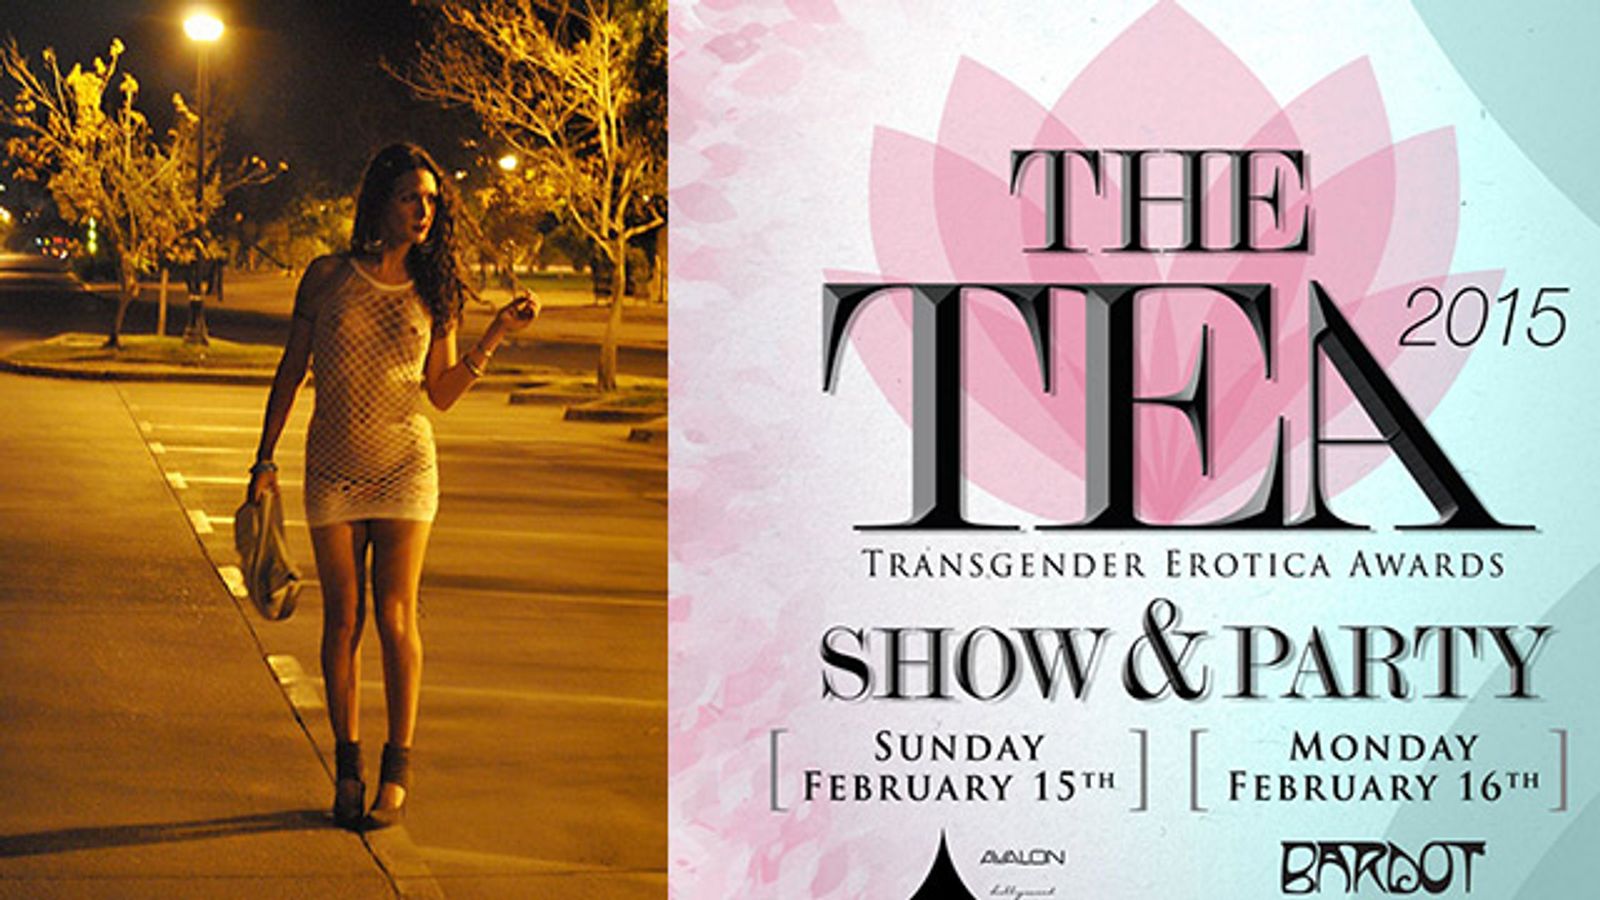 TS Star Nikki Montero Is 7th Transgender Erotica Awards Sponsor